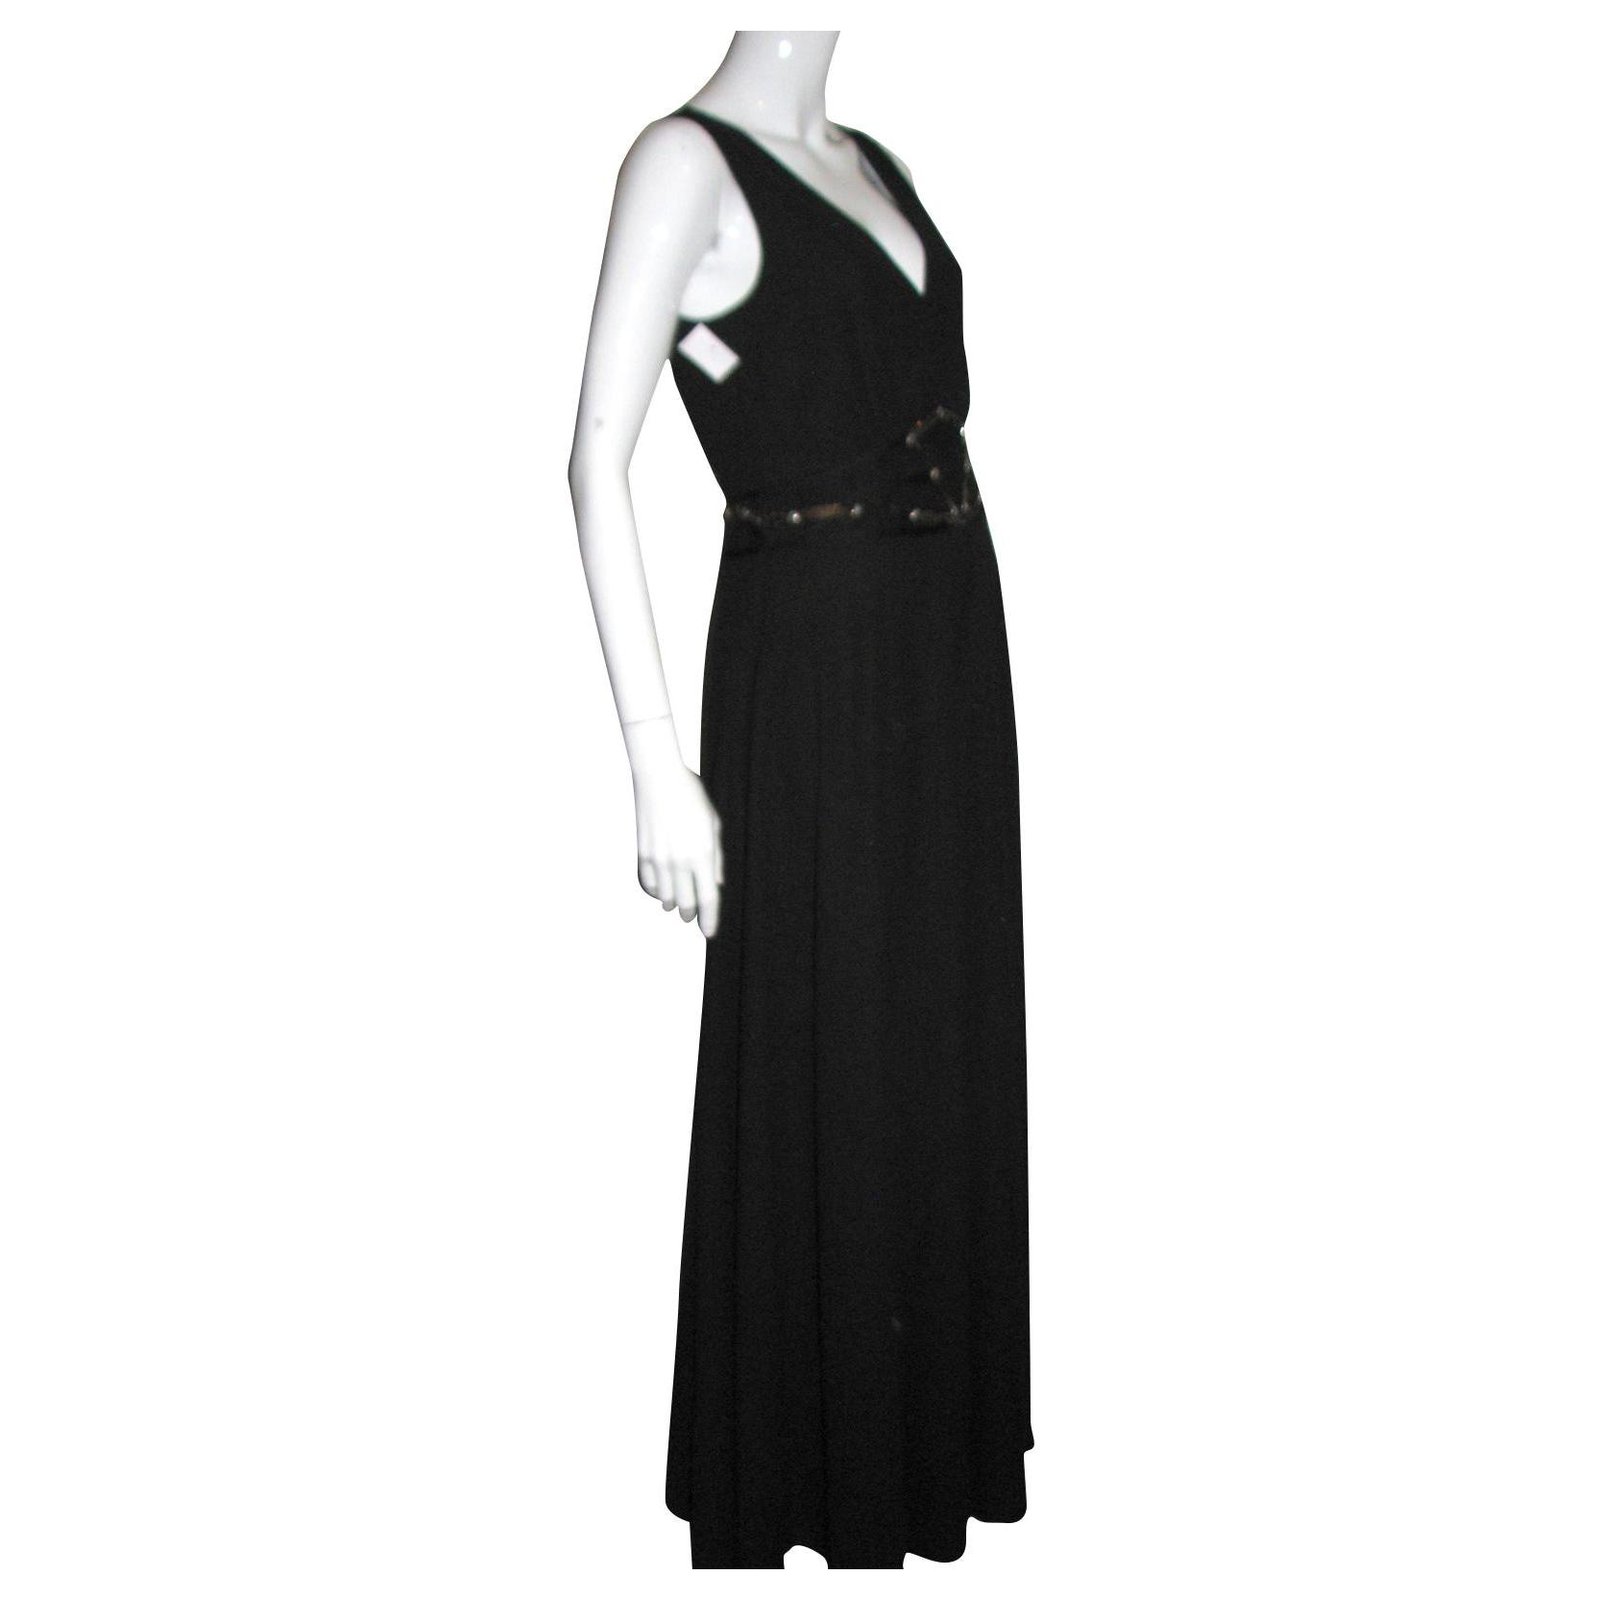 black chiffon evening gown